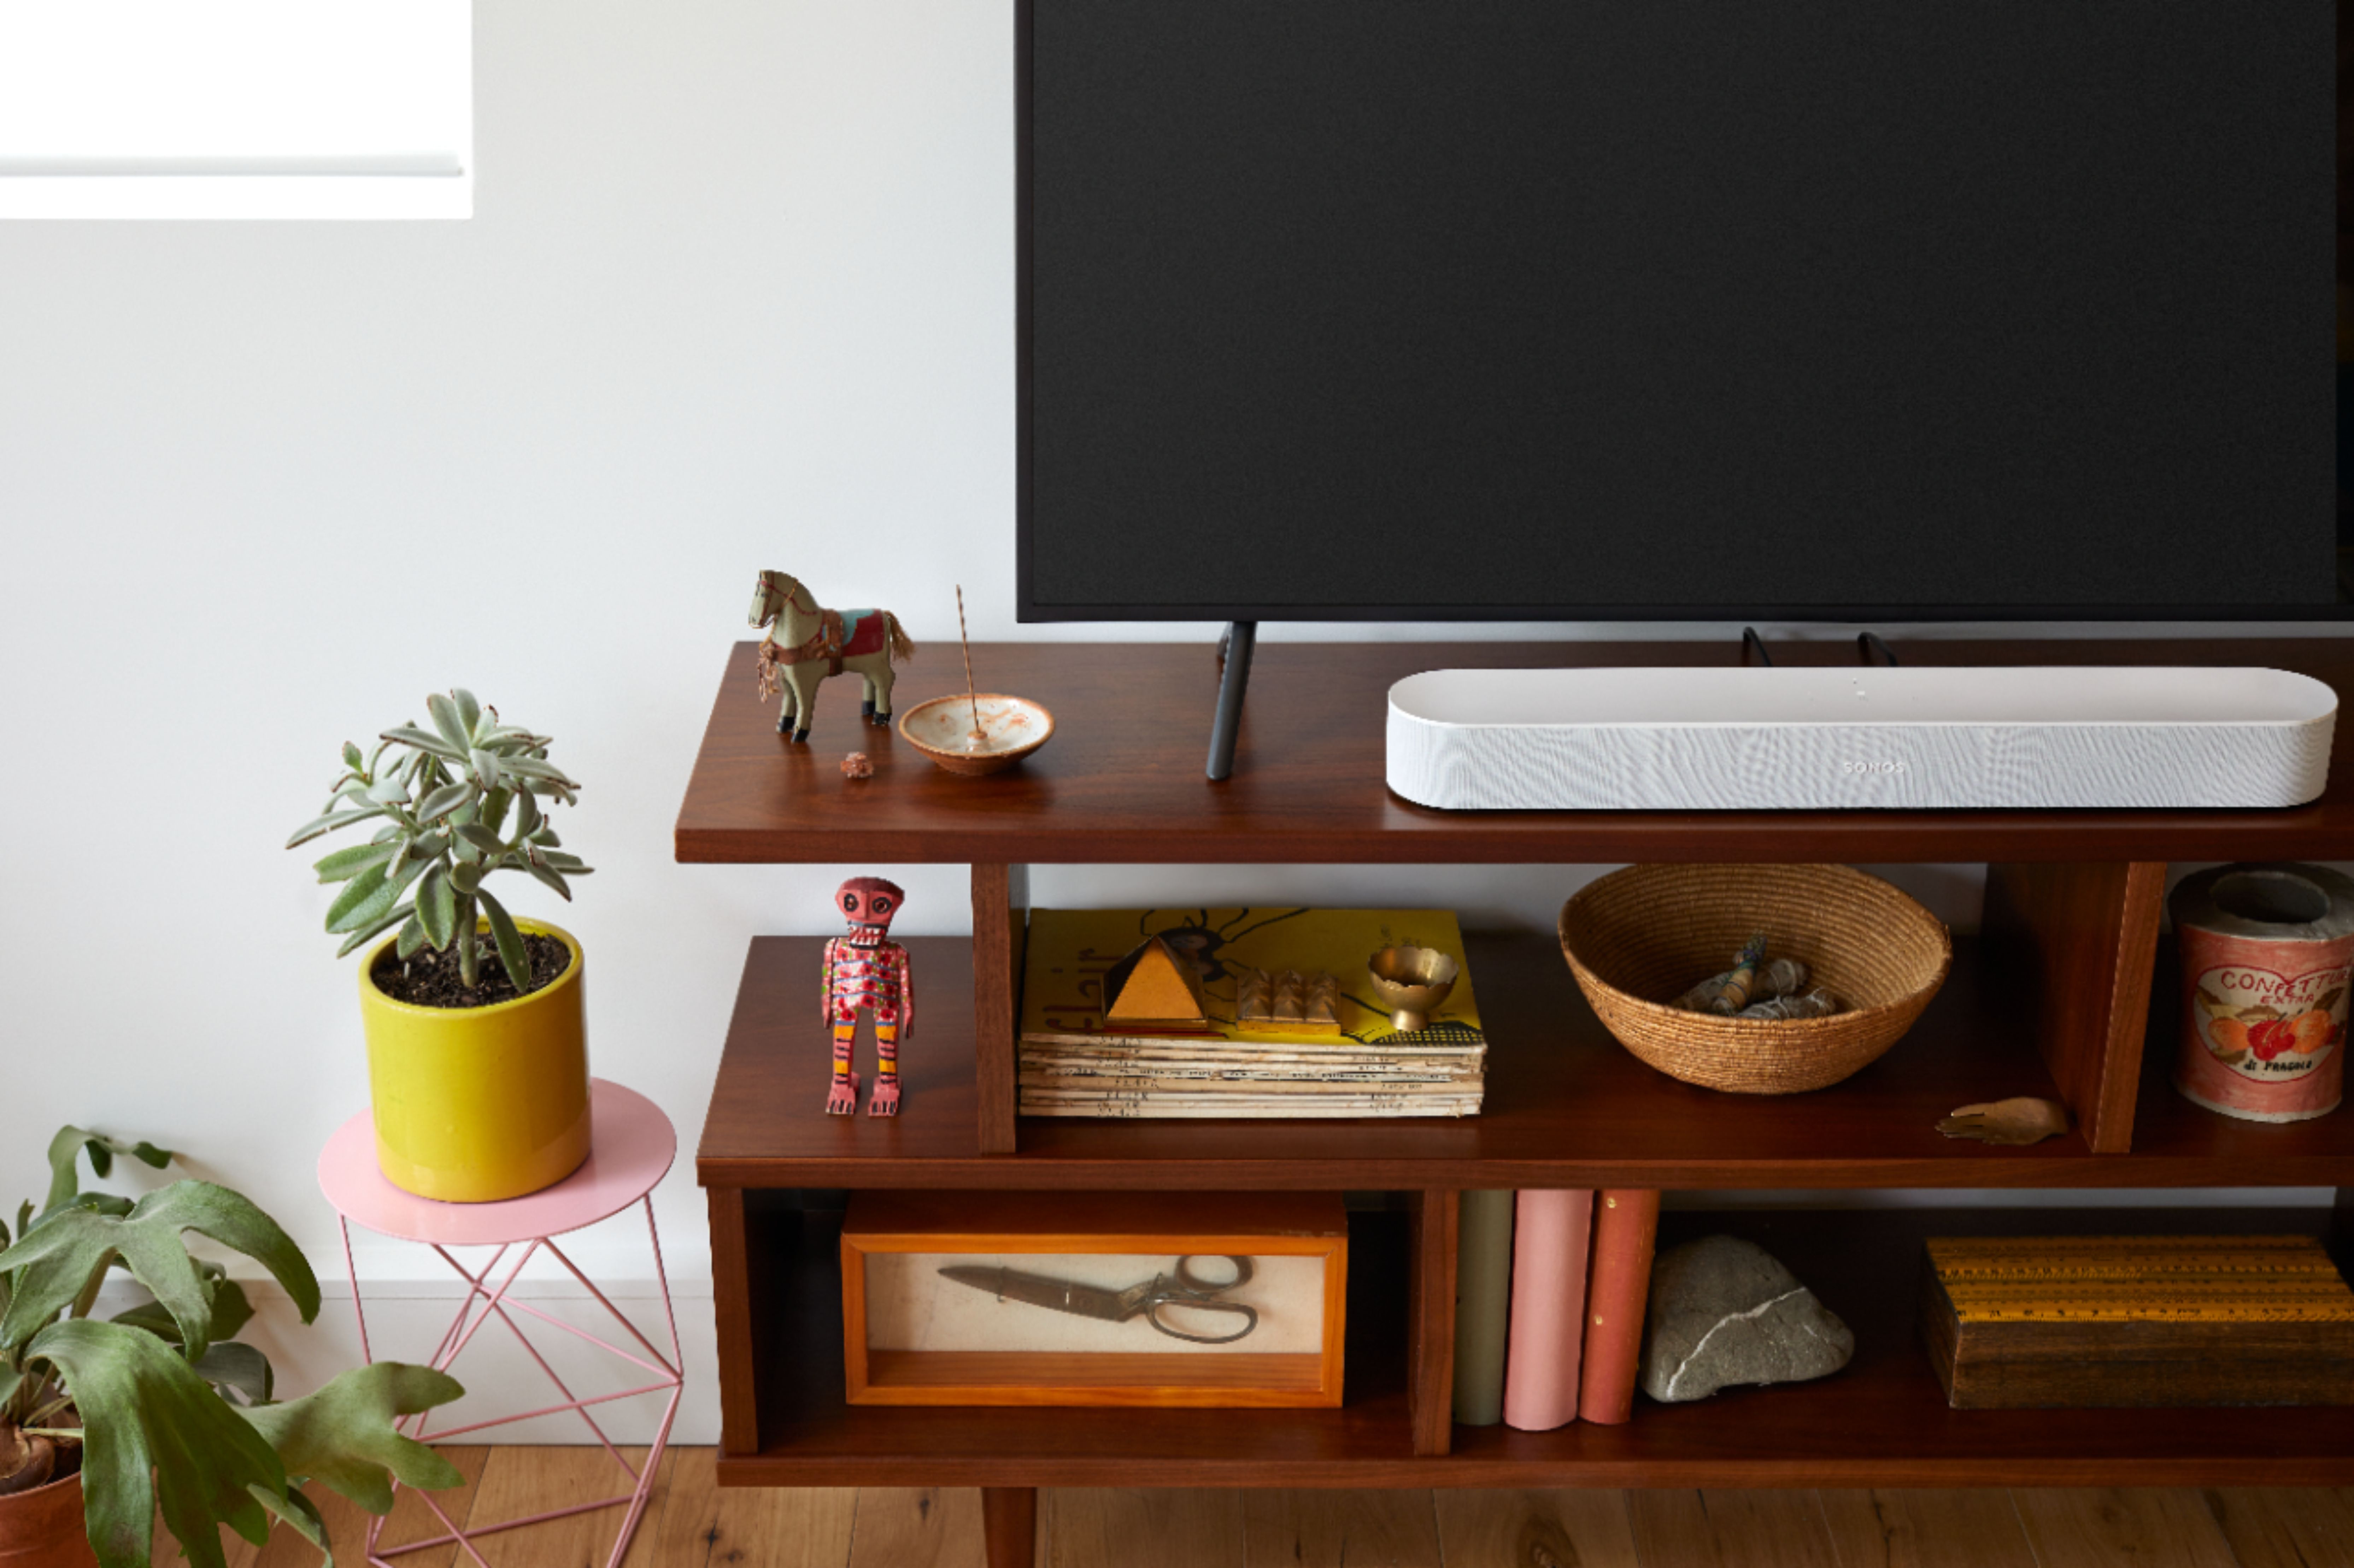 Best Buy: Sonos Beam Soundbar with Voice Control built-in White